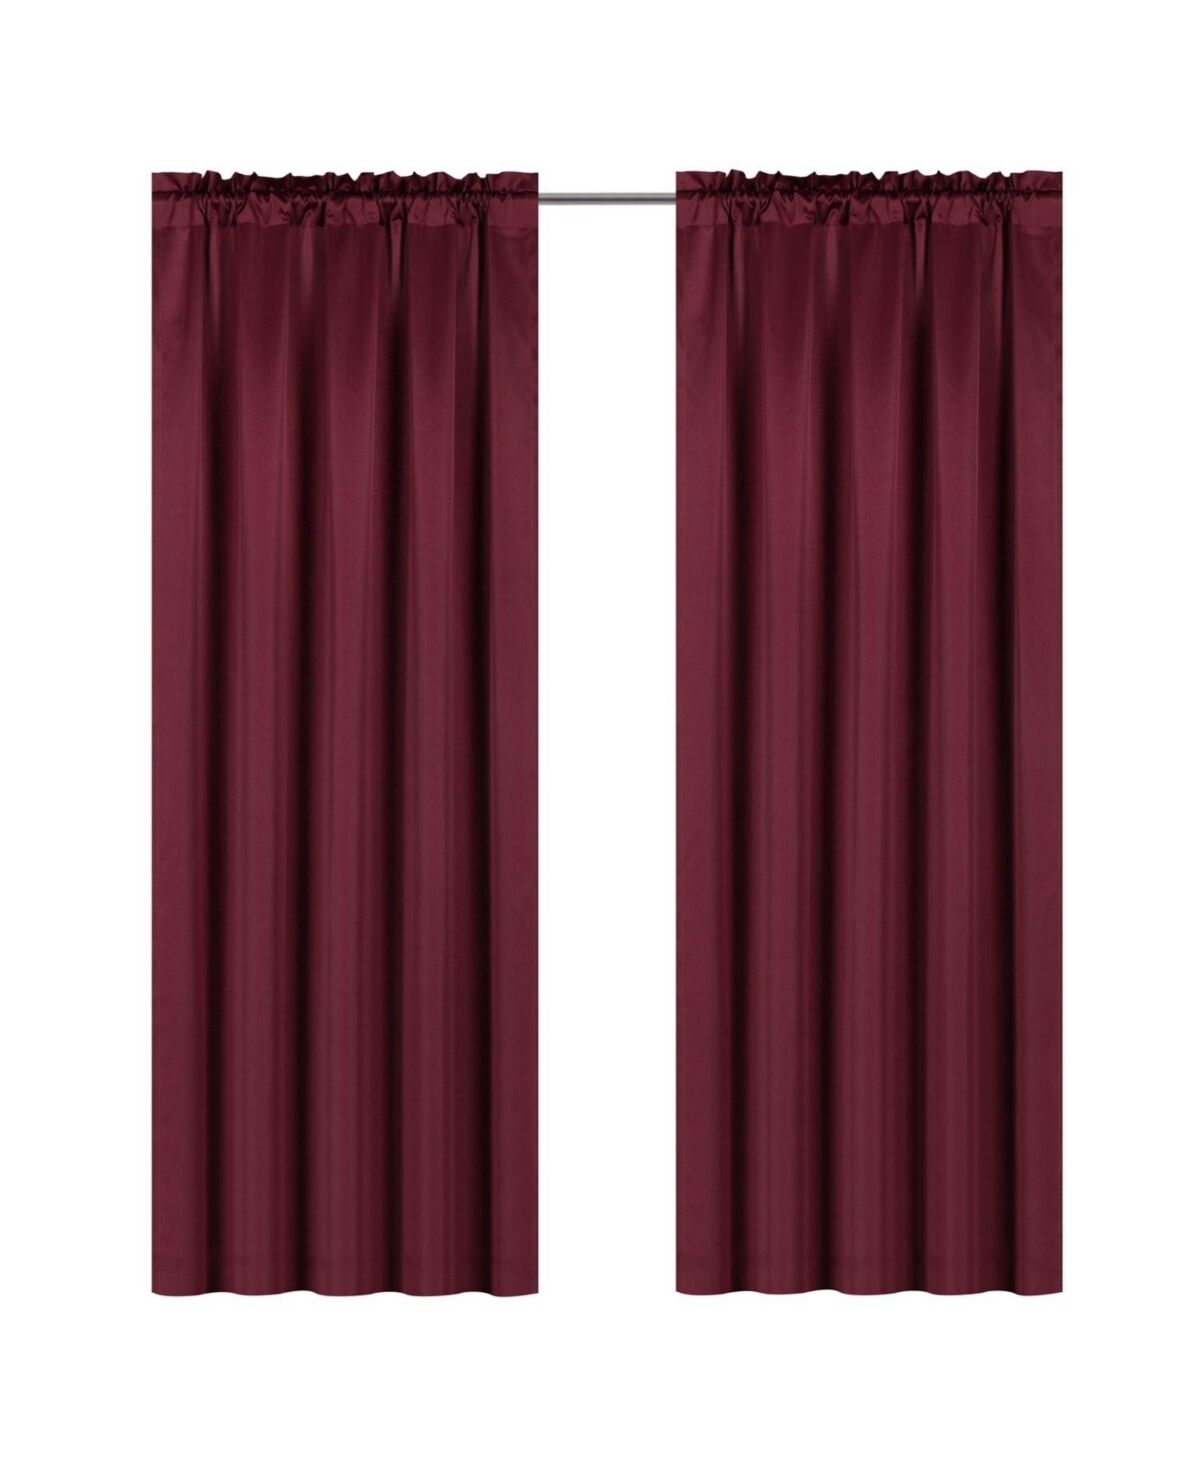 Kate Aurora Lux Living Complete 9 Piece Semi Sheer Rod Pocket Window Curtain & Valance Set - All burgundy